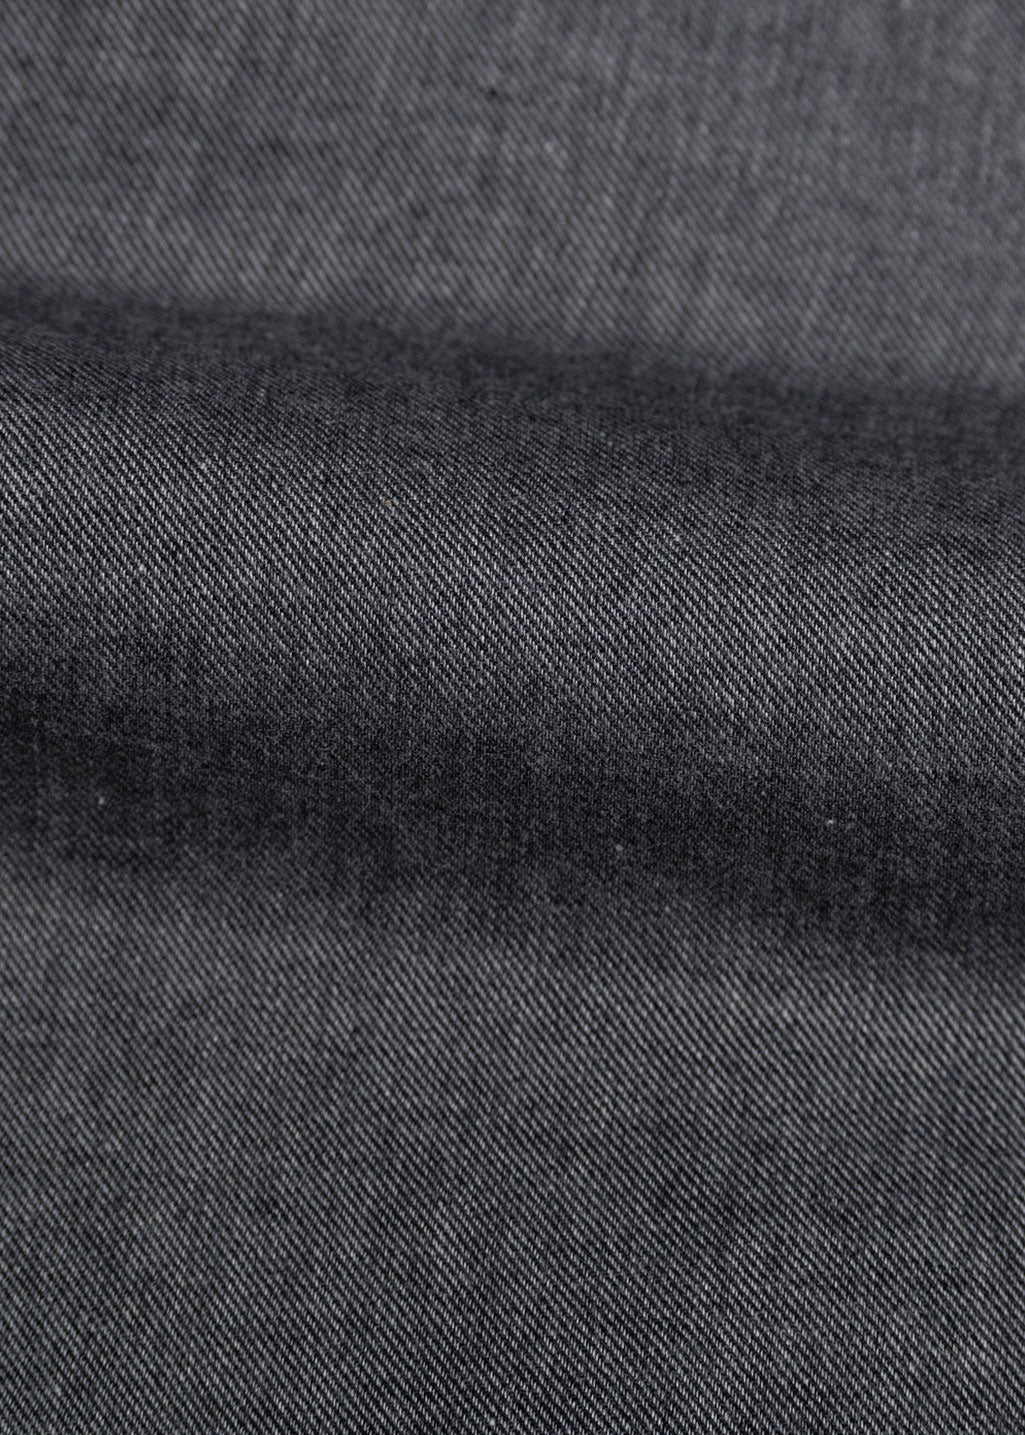 Naked & Famous Denim - Short Sleeve Easy Shirt - Organic Cotton Twill - Black - Hardpressed Print Studio